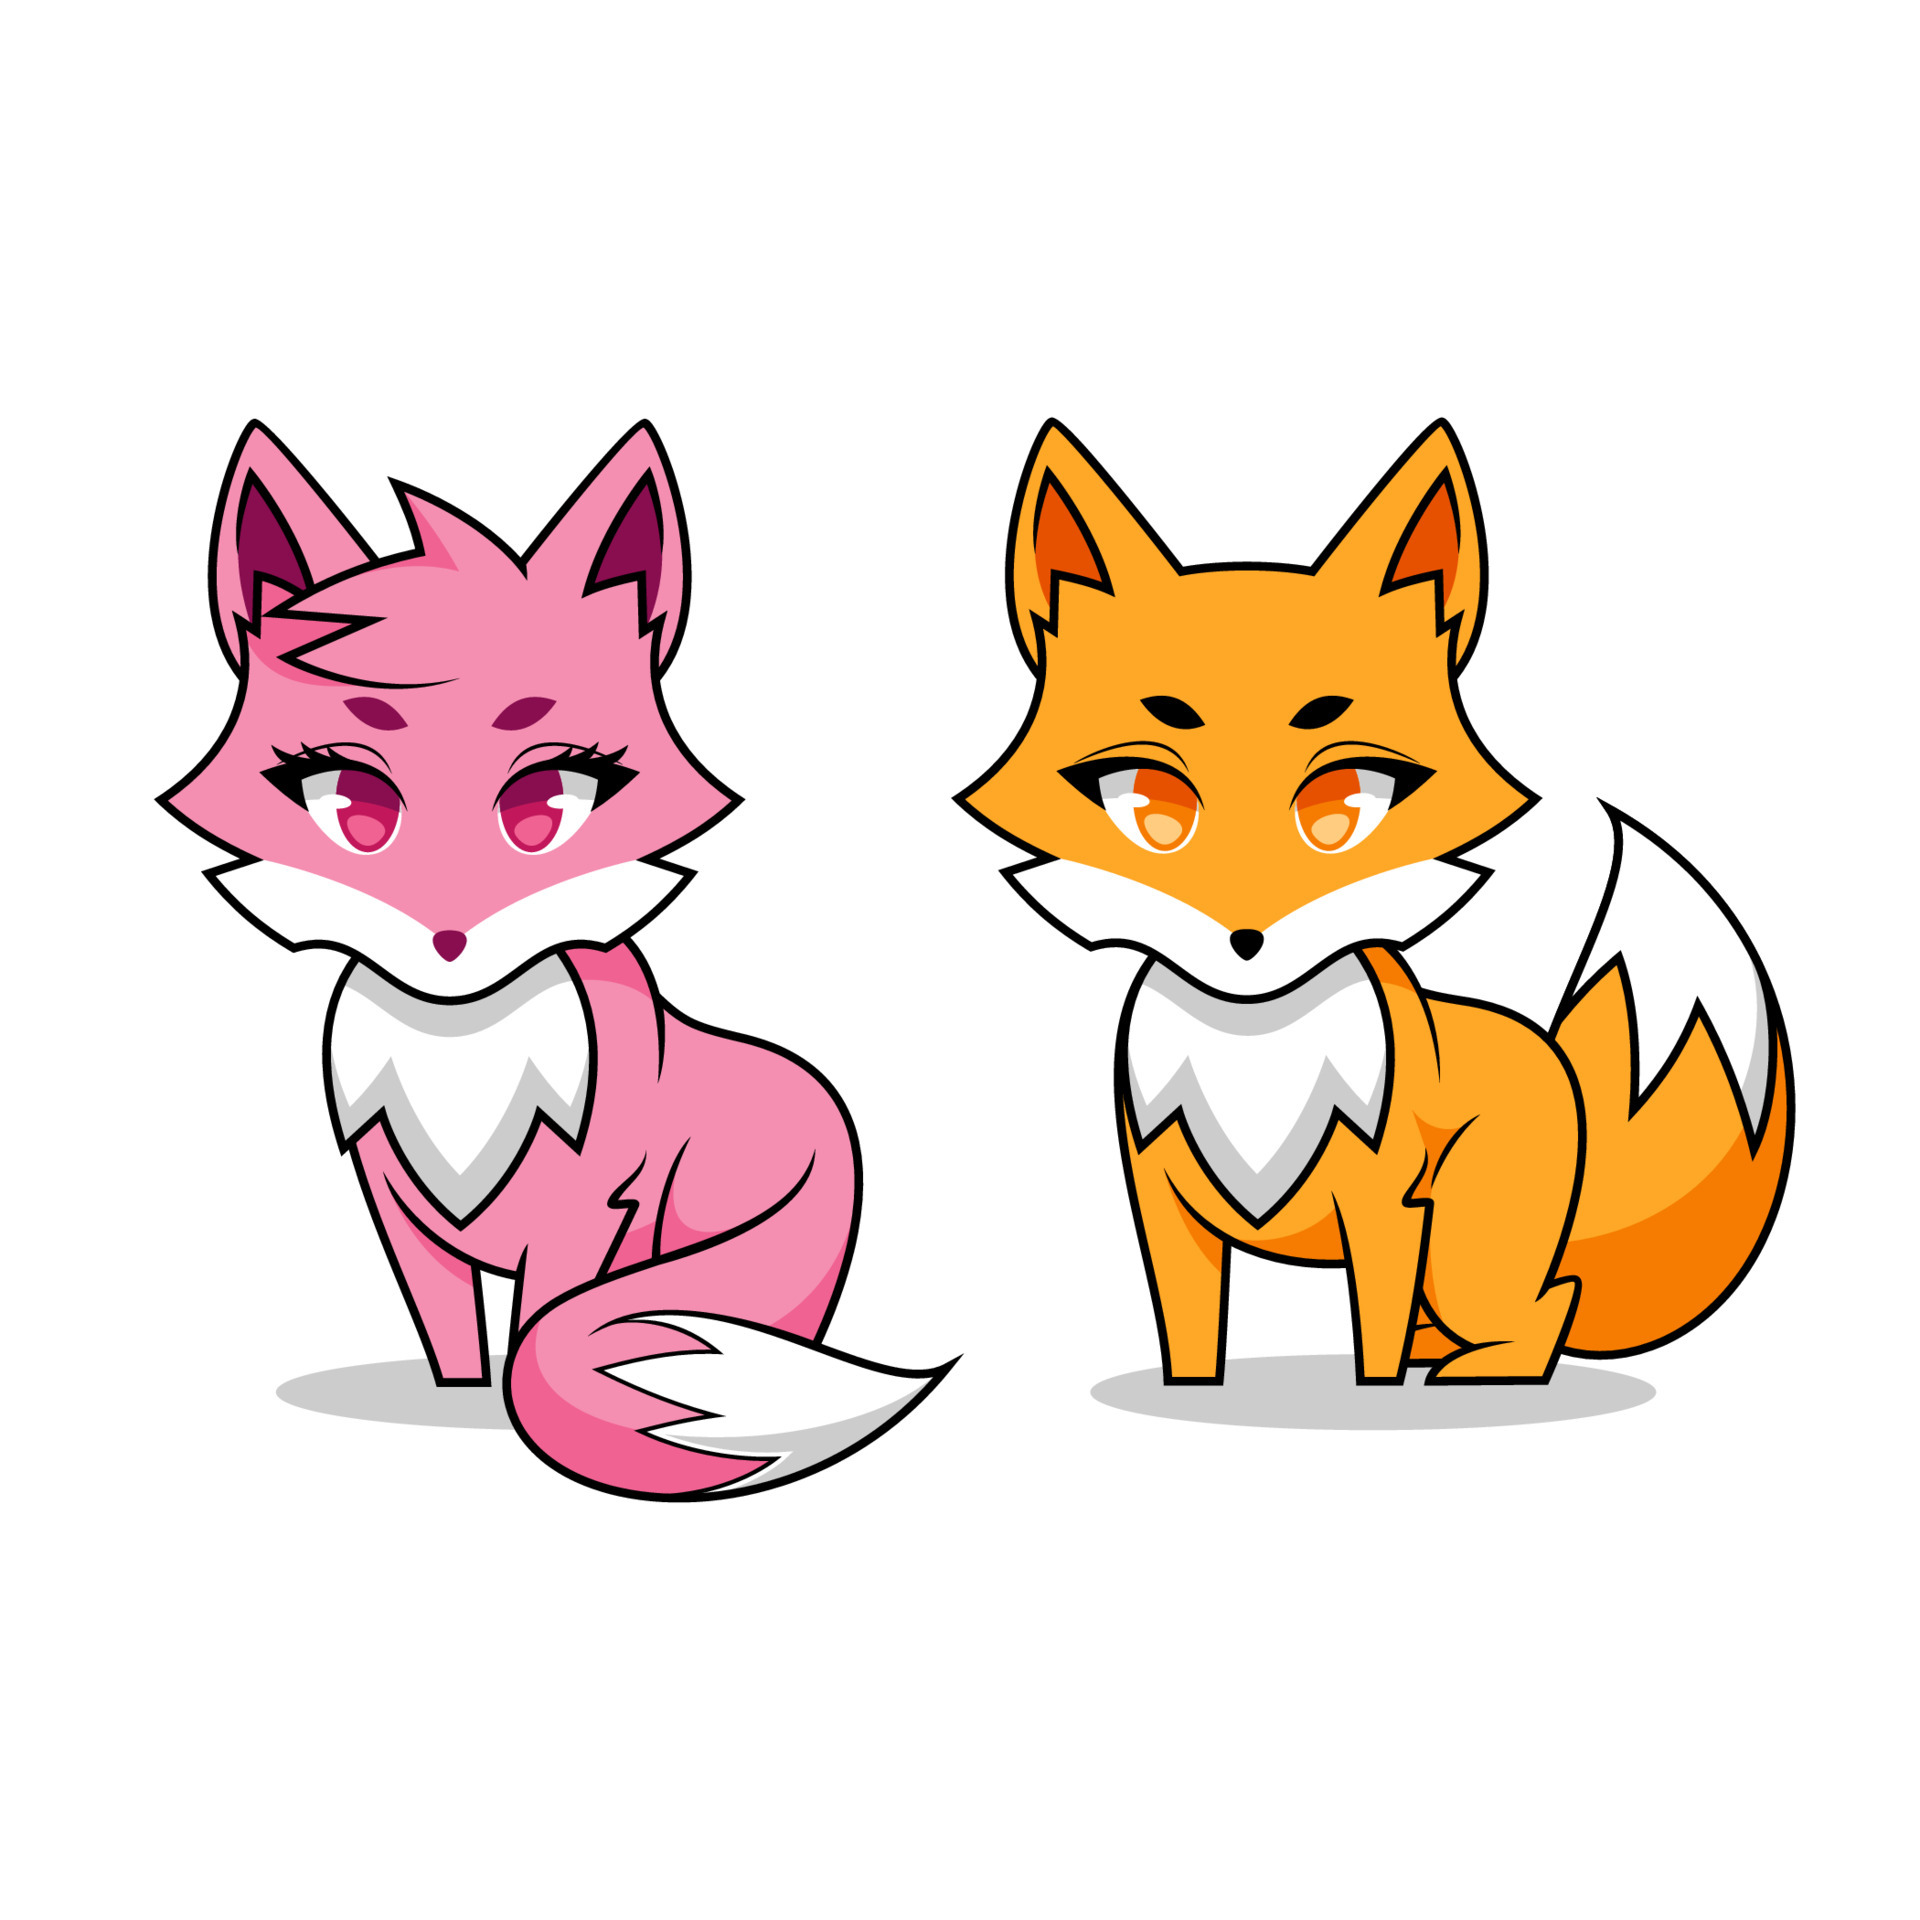 Share 147+ cute foxes anime